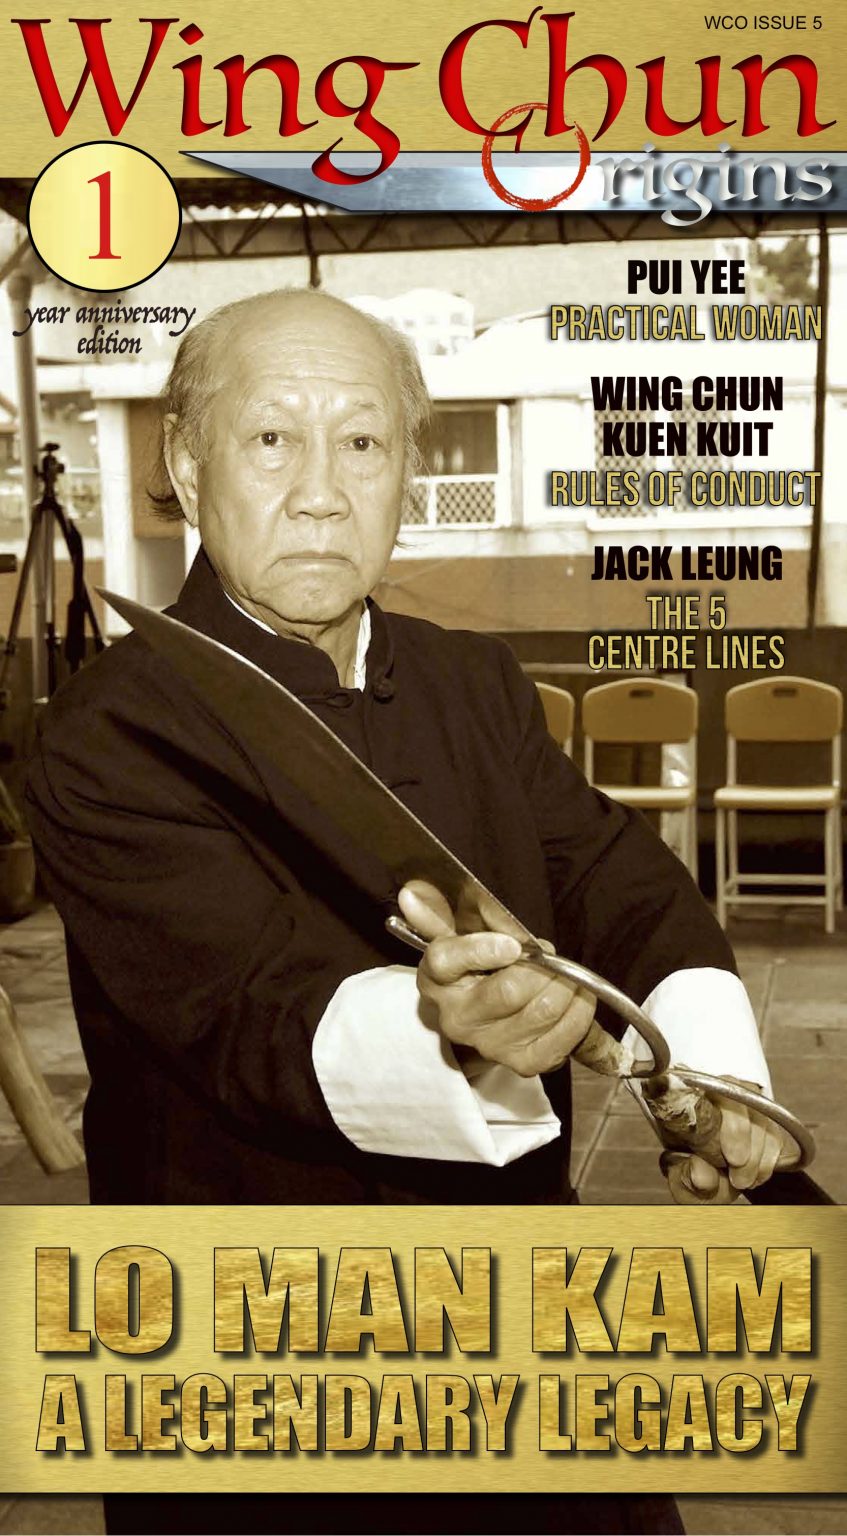 Wing Chun Origins Issue 4